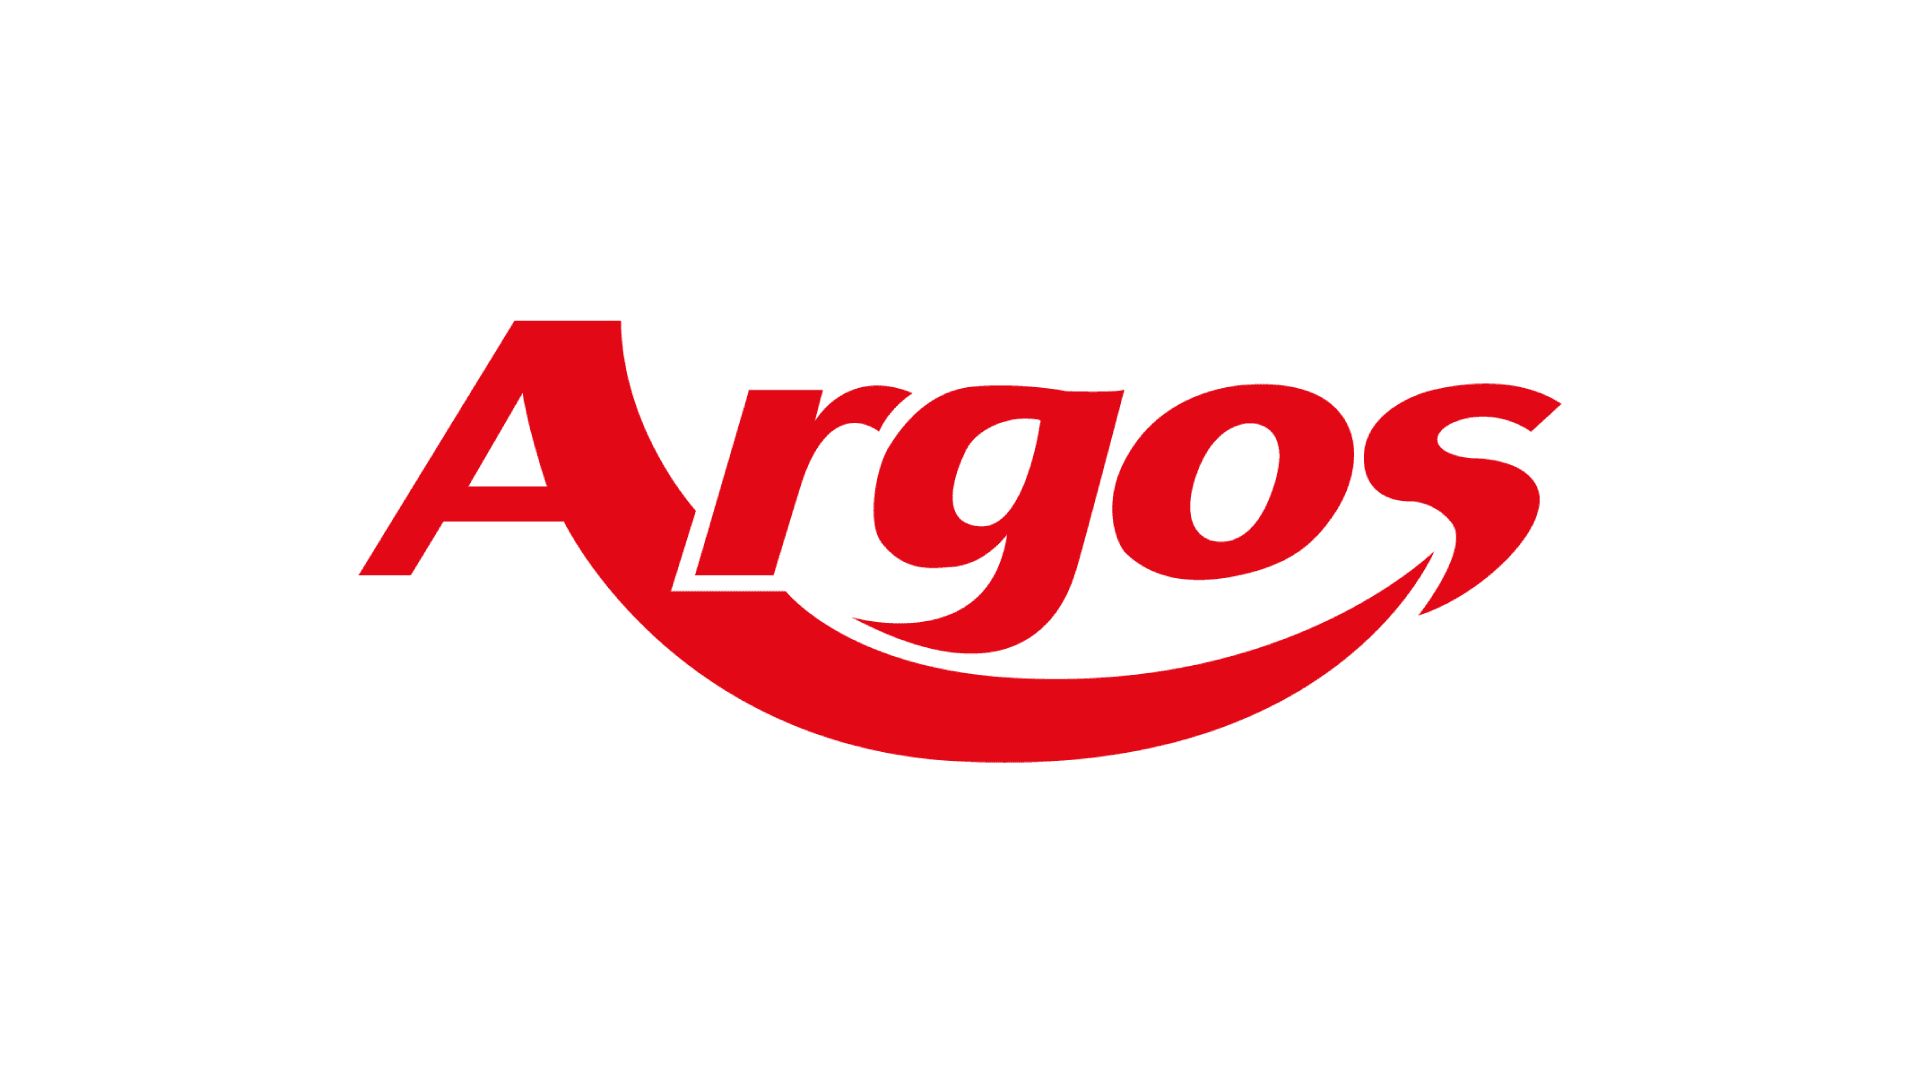 Argos works with CADS